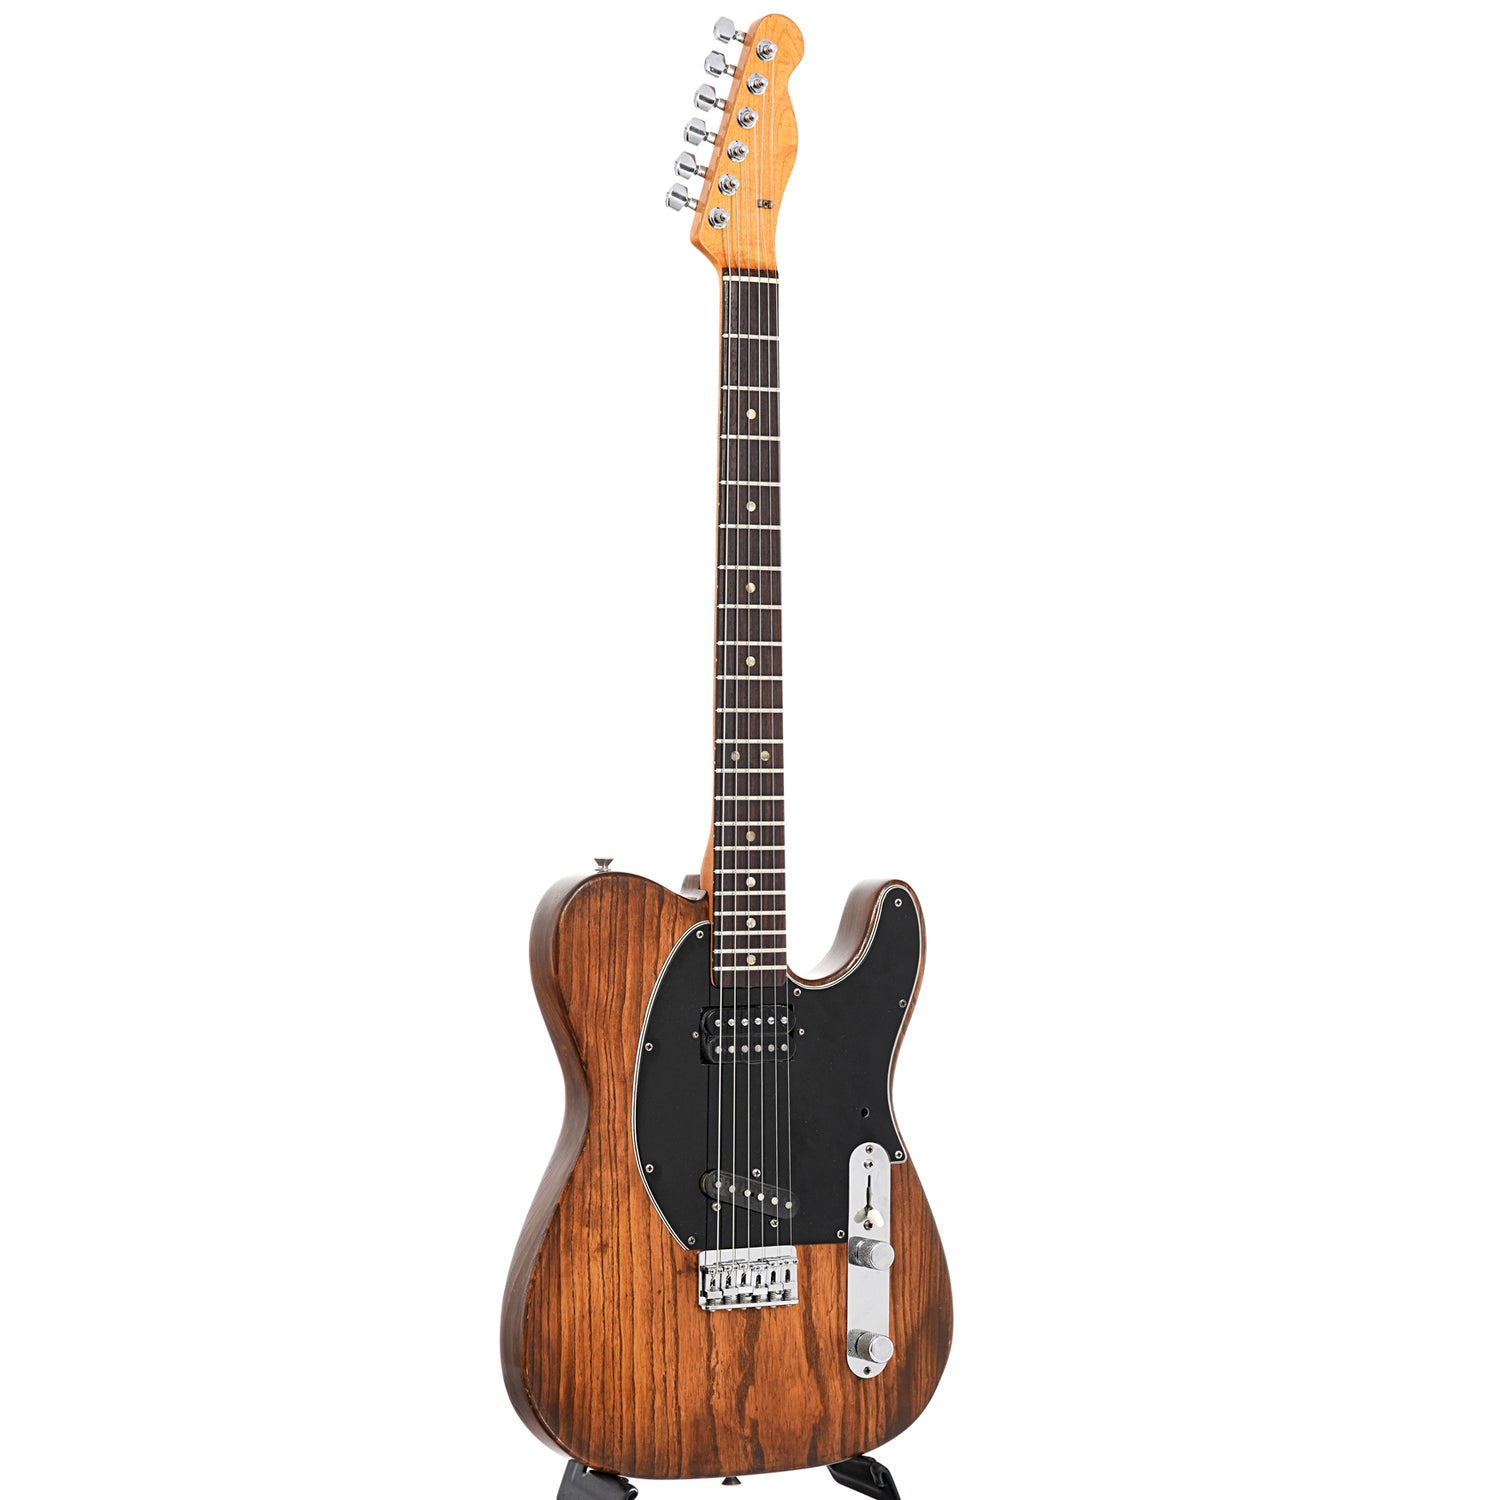 Fender Telecaster Electric Guitar (1966)